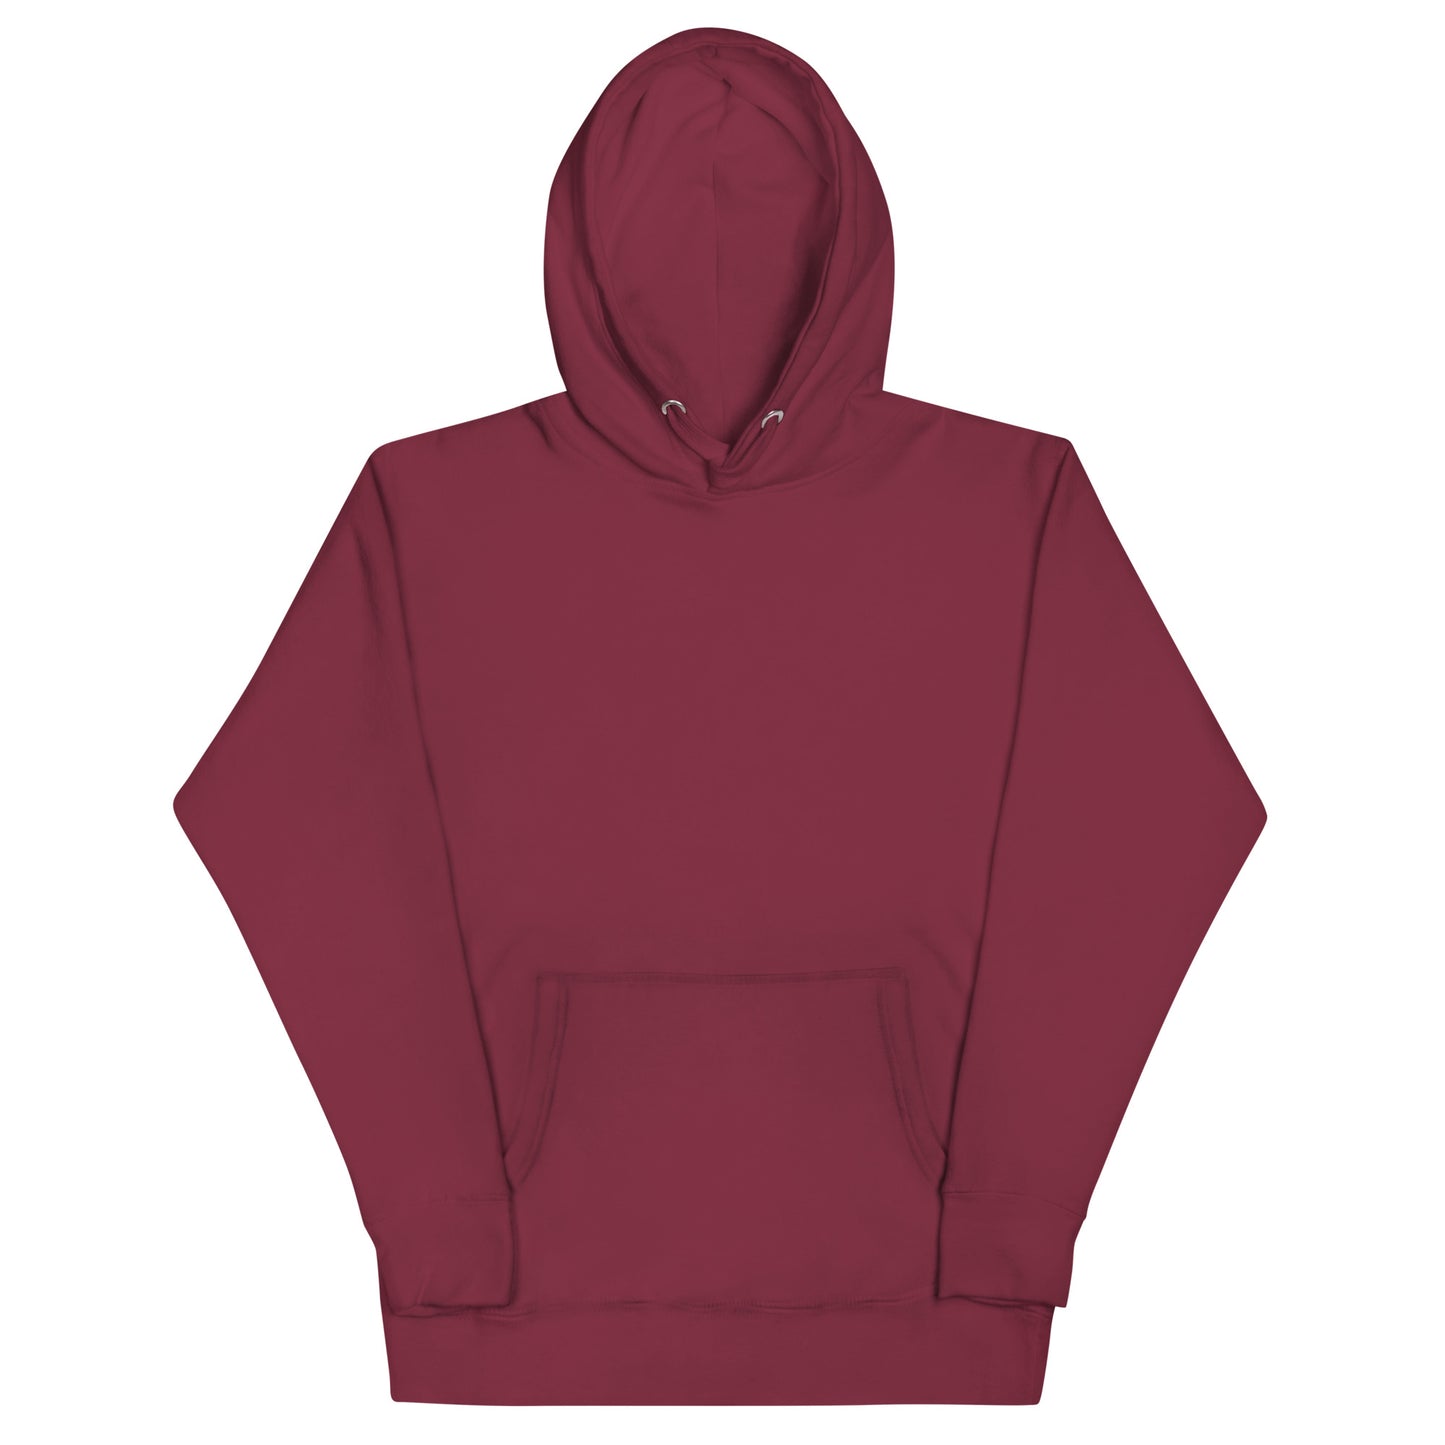 hoodies for men - hoodies - tshirts - shirts - tees - gym - workout